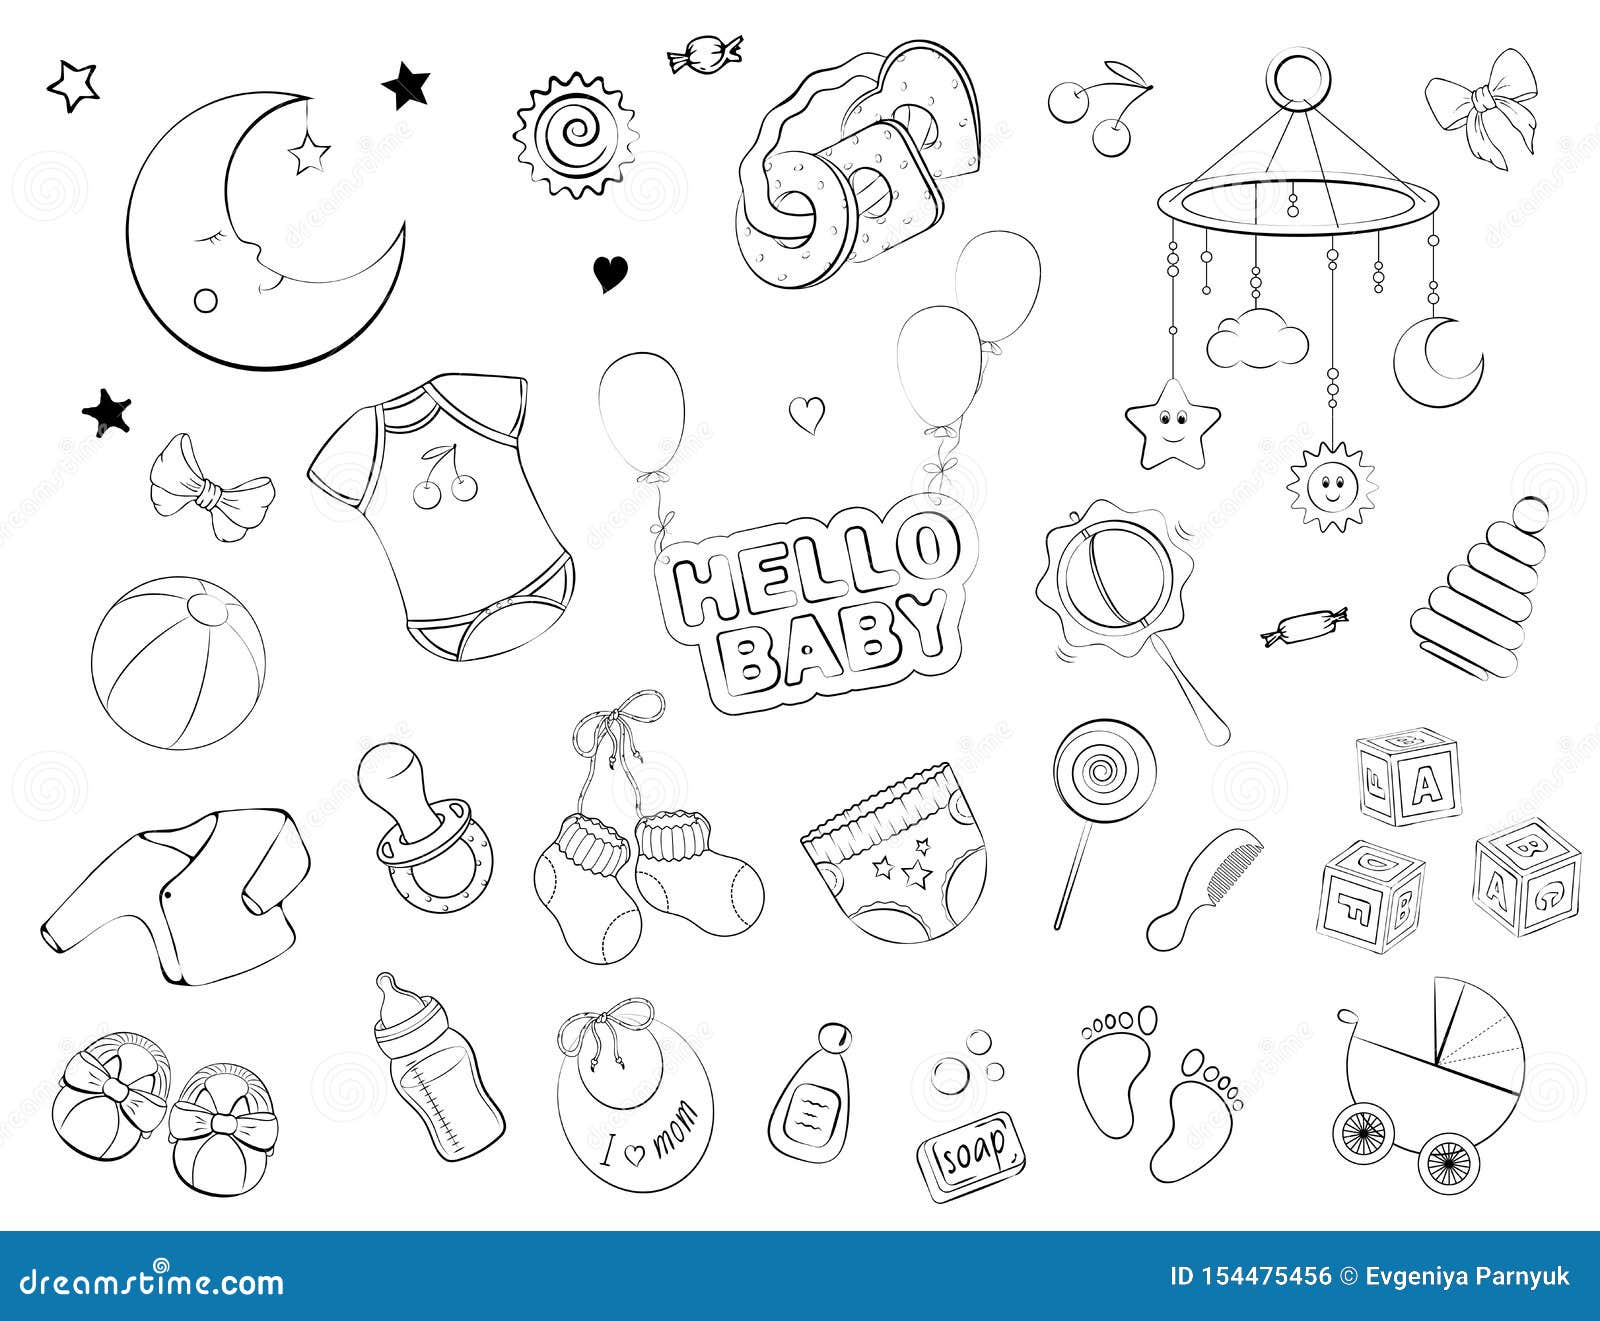 Newborn Infant Themed Doodle Set Stock Vector - Illustration of item ...